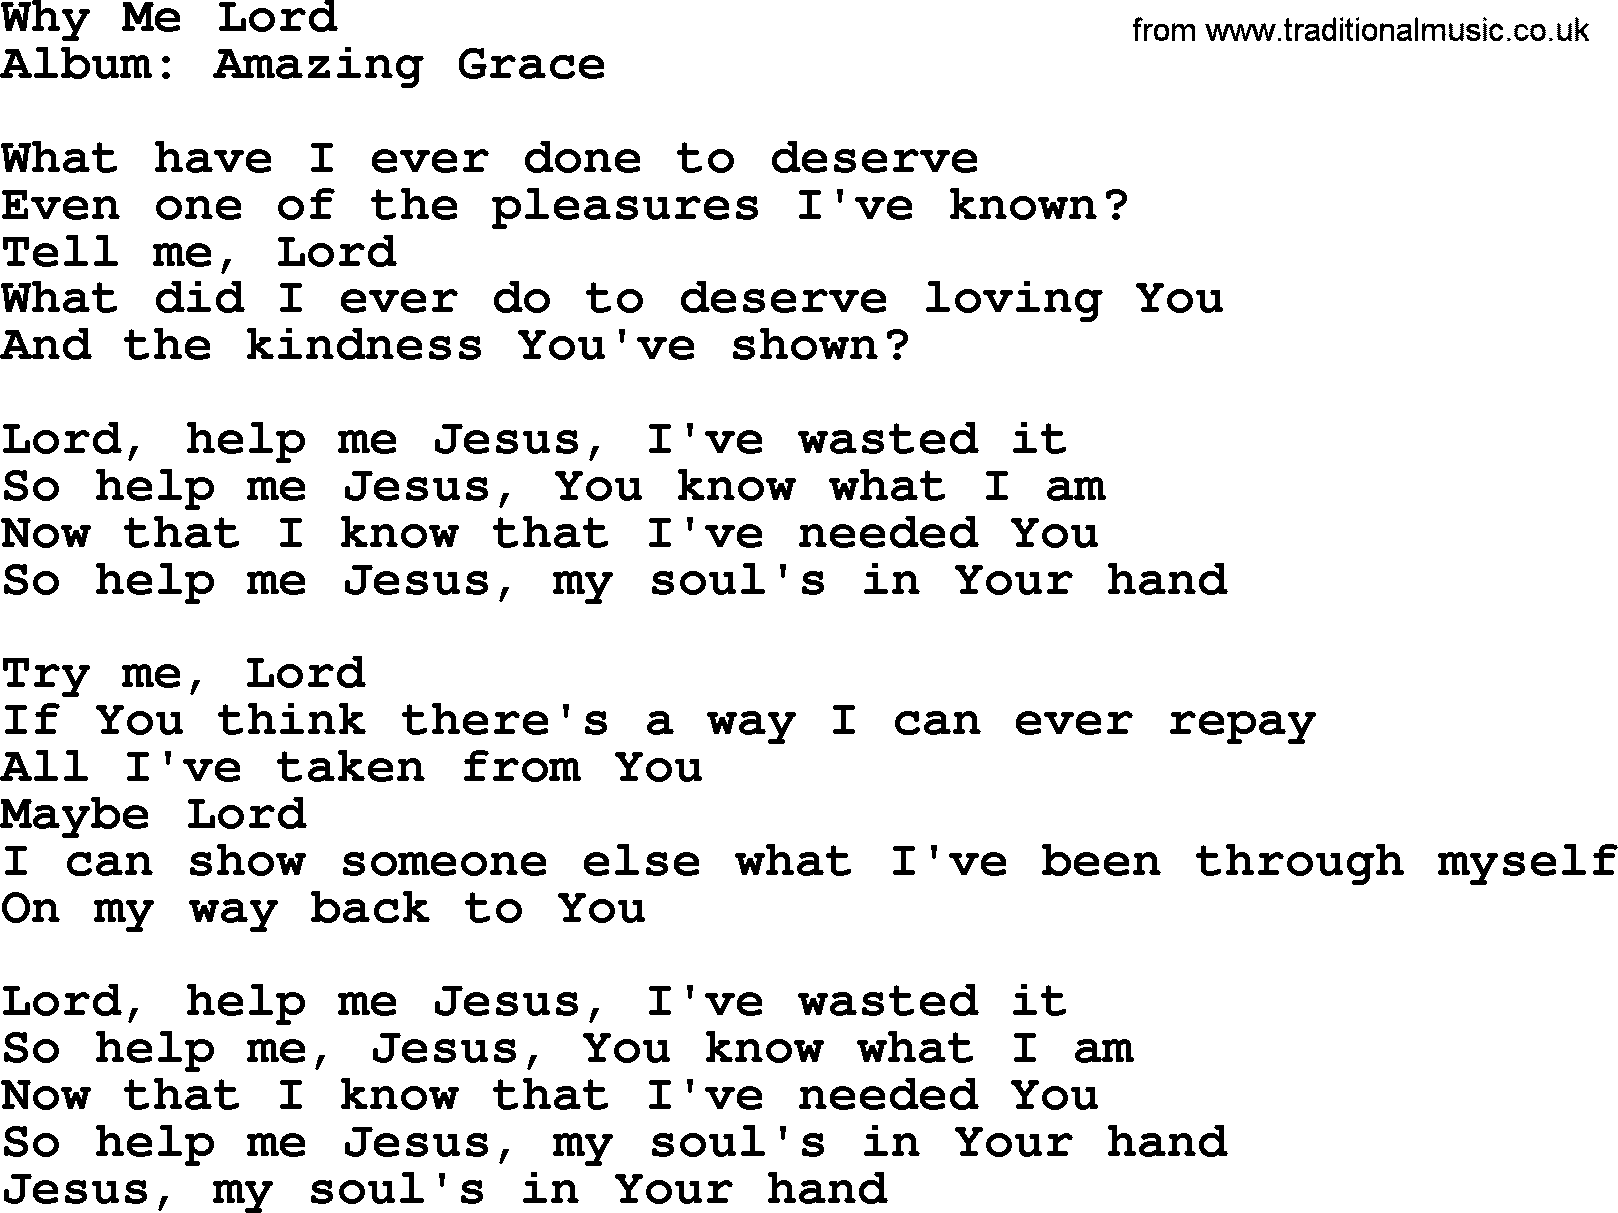 George Jones song: Why Me Lord, lyrics